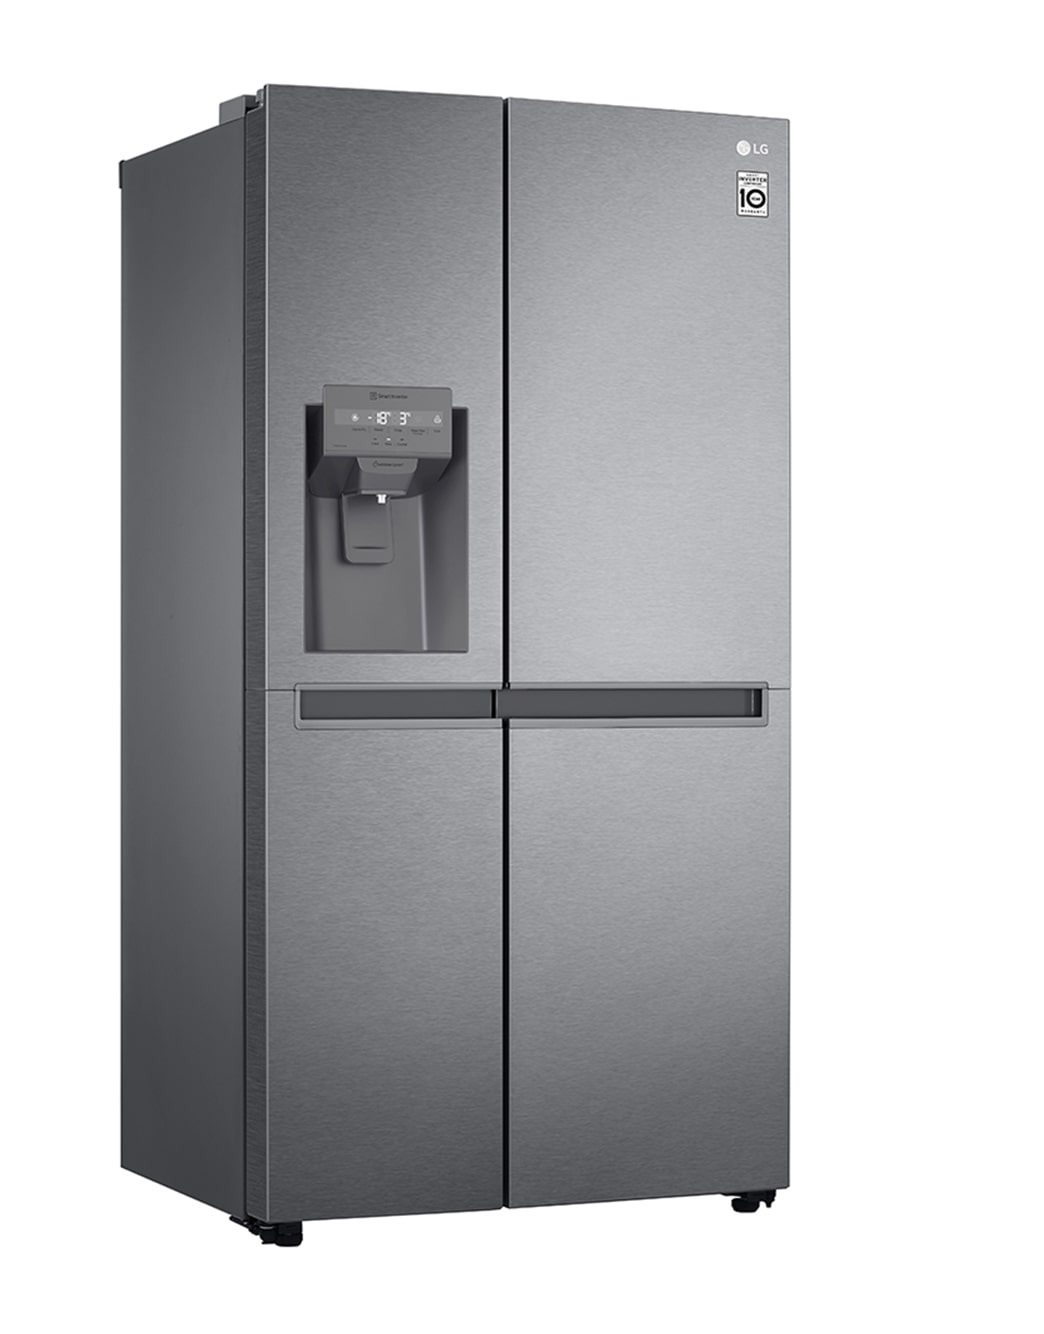 Refrigeradora SidebySide 23.8pᶟ (G) / 21.6pᶟ (N) LG LS66SDN